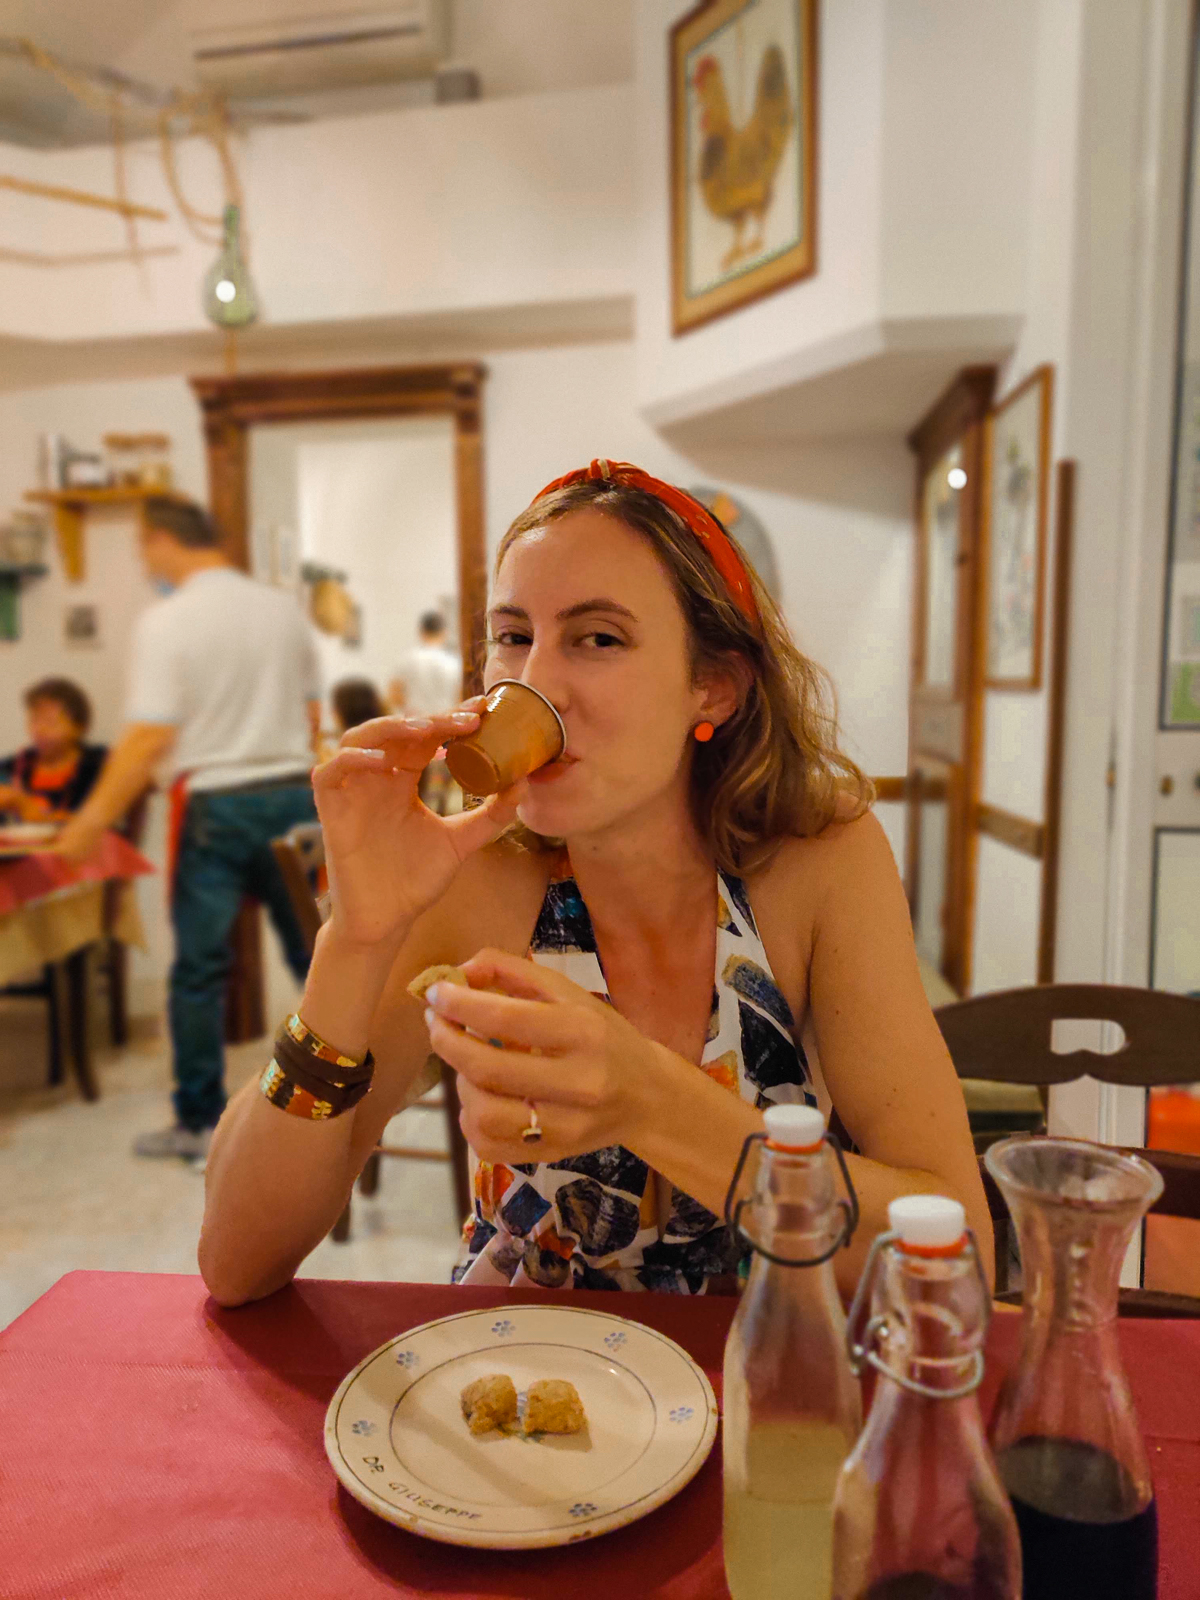 Towns in Puglia: Ceglie Messapica, A Gastronomic Capital travel guide travel blog svadore what to do what to see where to stay in puglia where to eat osteria da giuseppe biscotti cegliesi donkey pasta asino